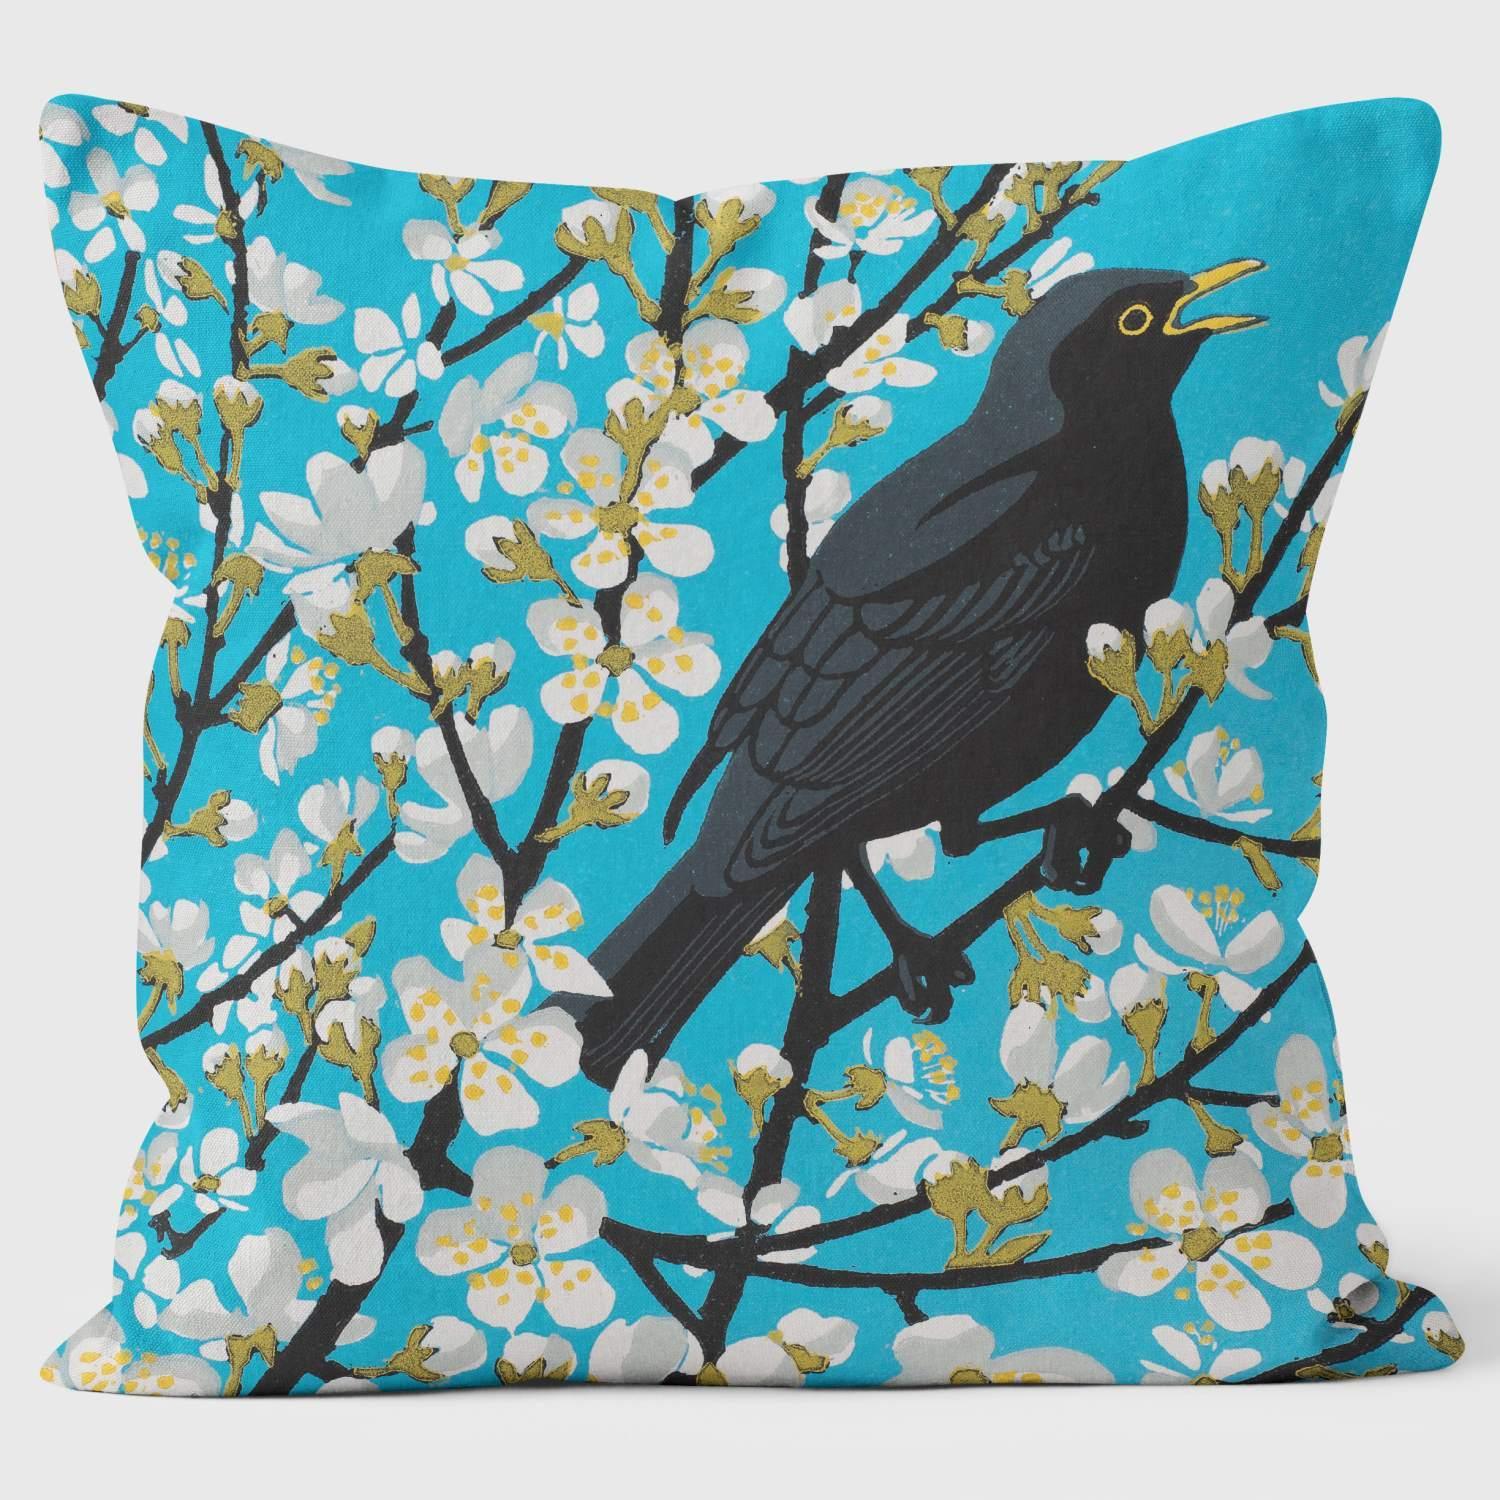 Blackthorn Blackbird - Robert Gillmor Cushion - Handmade Cushions UK - WeLoveCushions